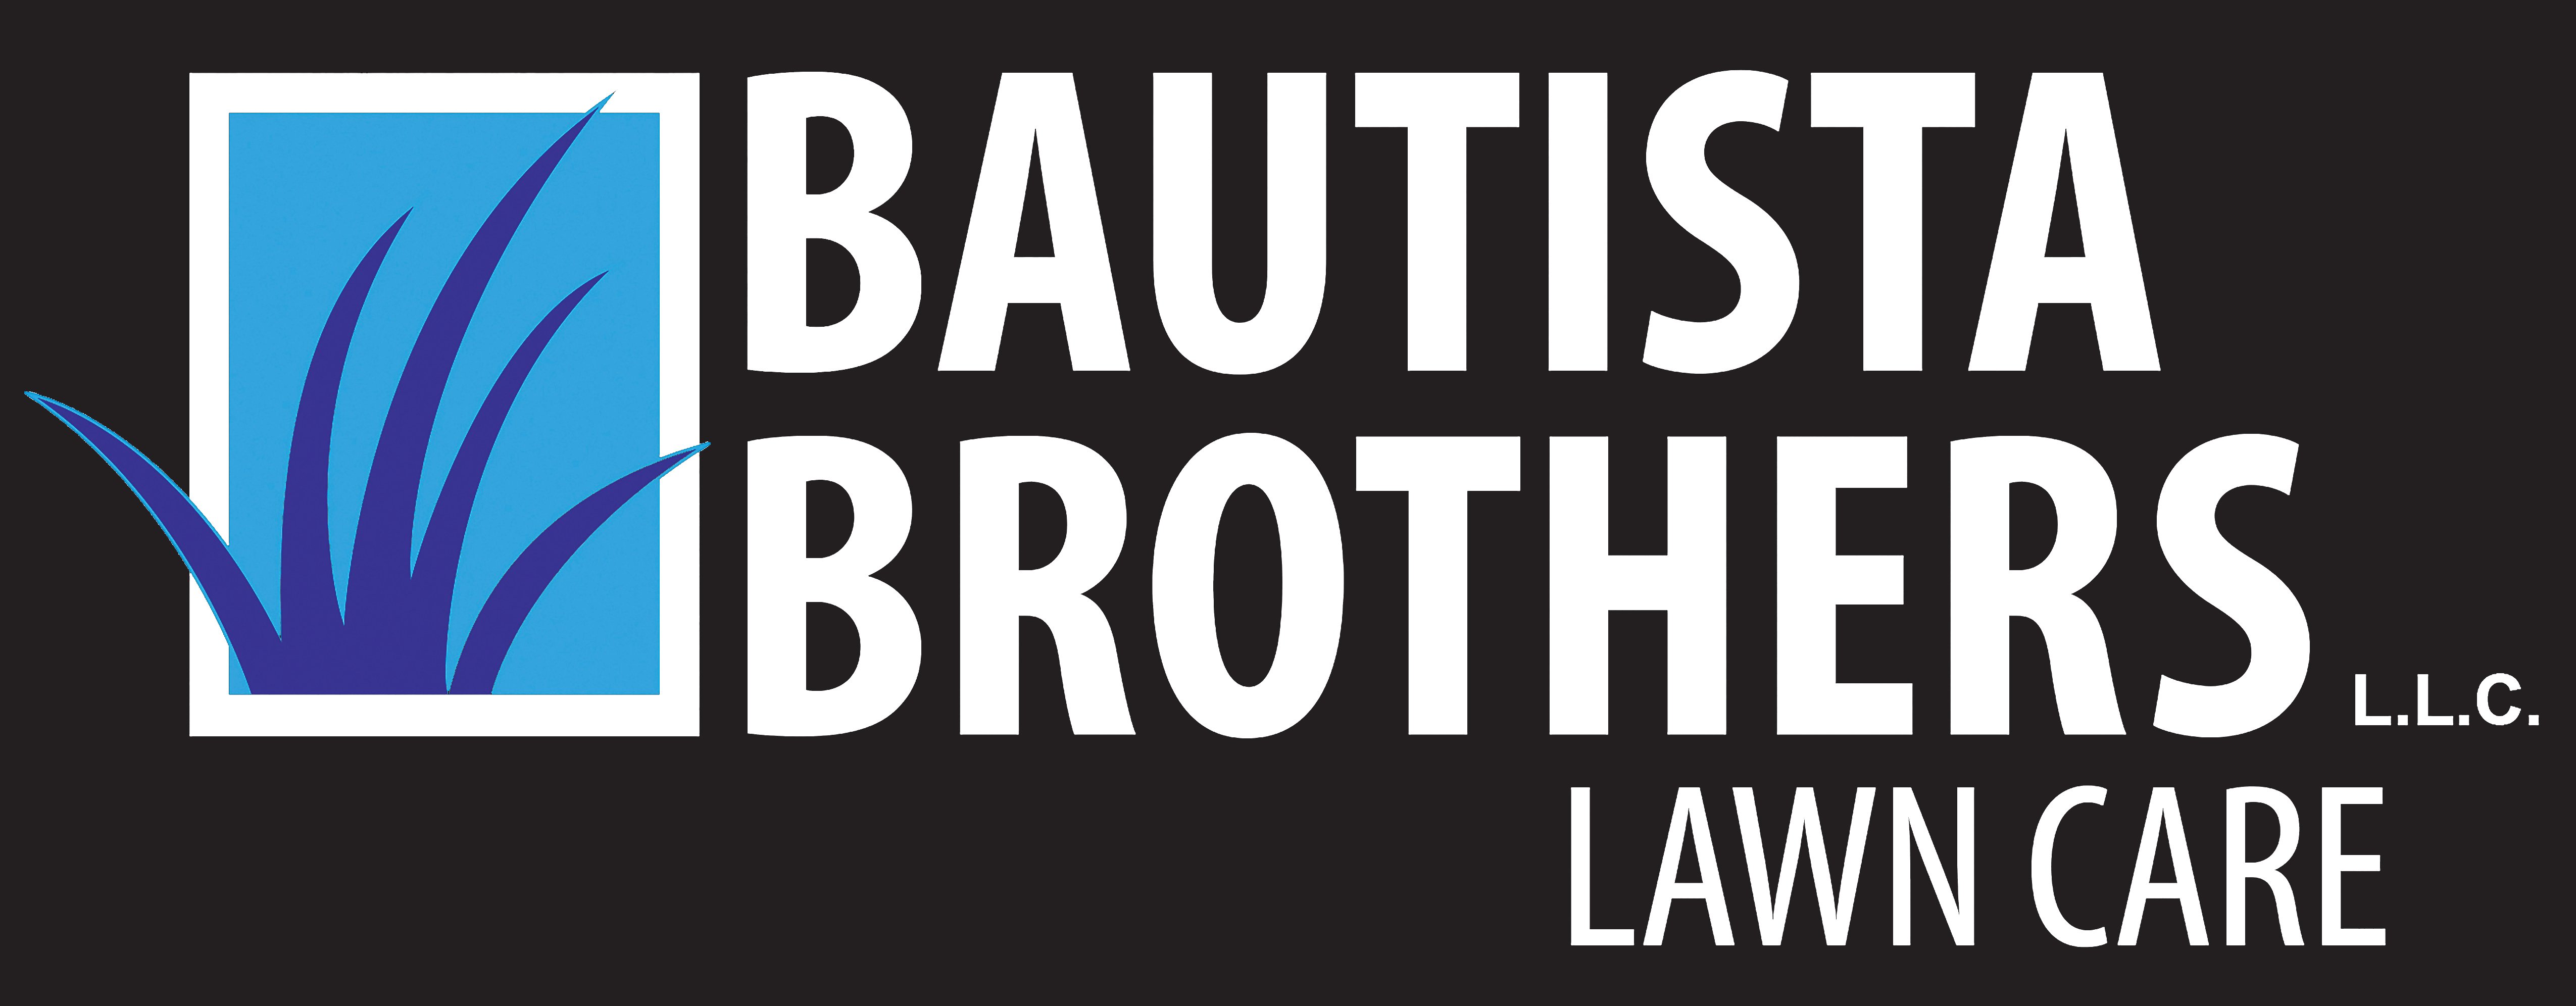 Bautista Brother's Lawn Care, LLC Logo